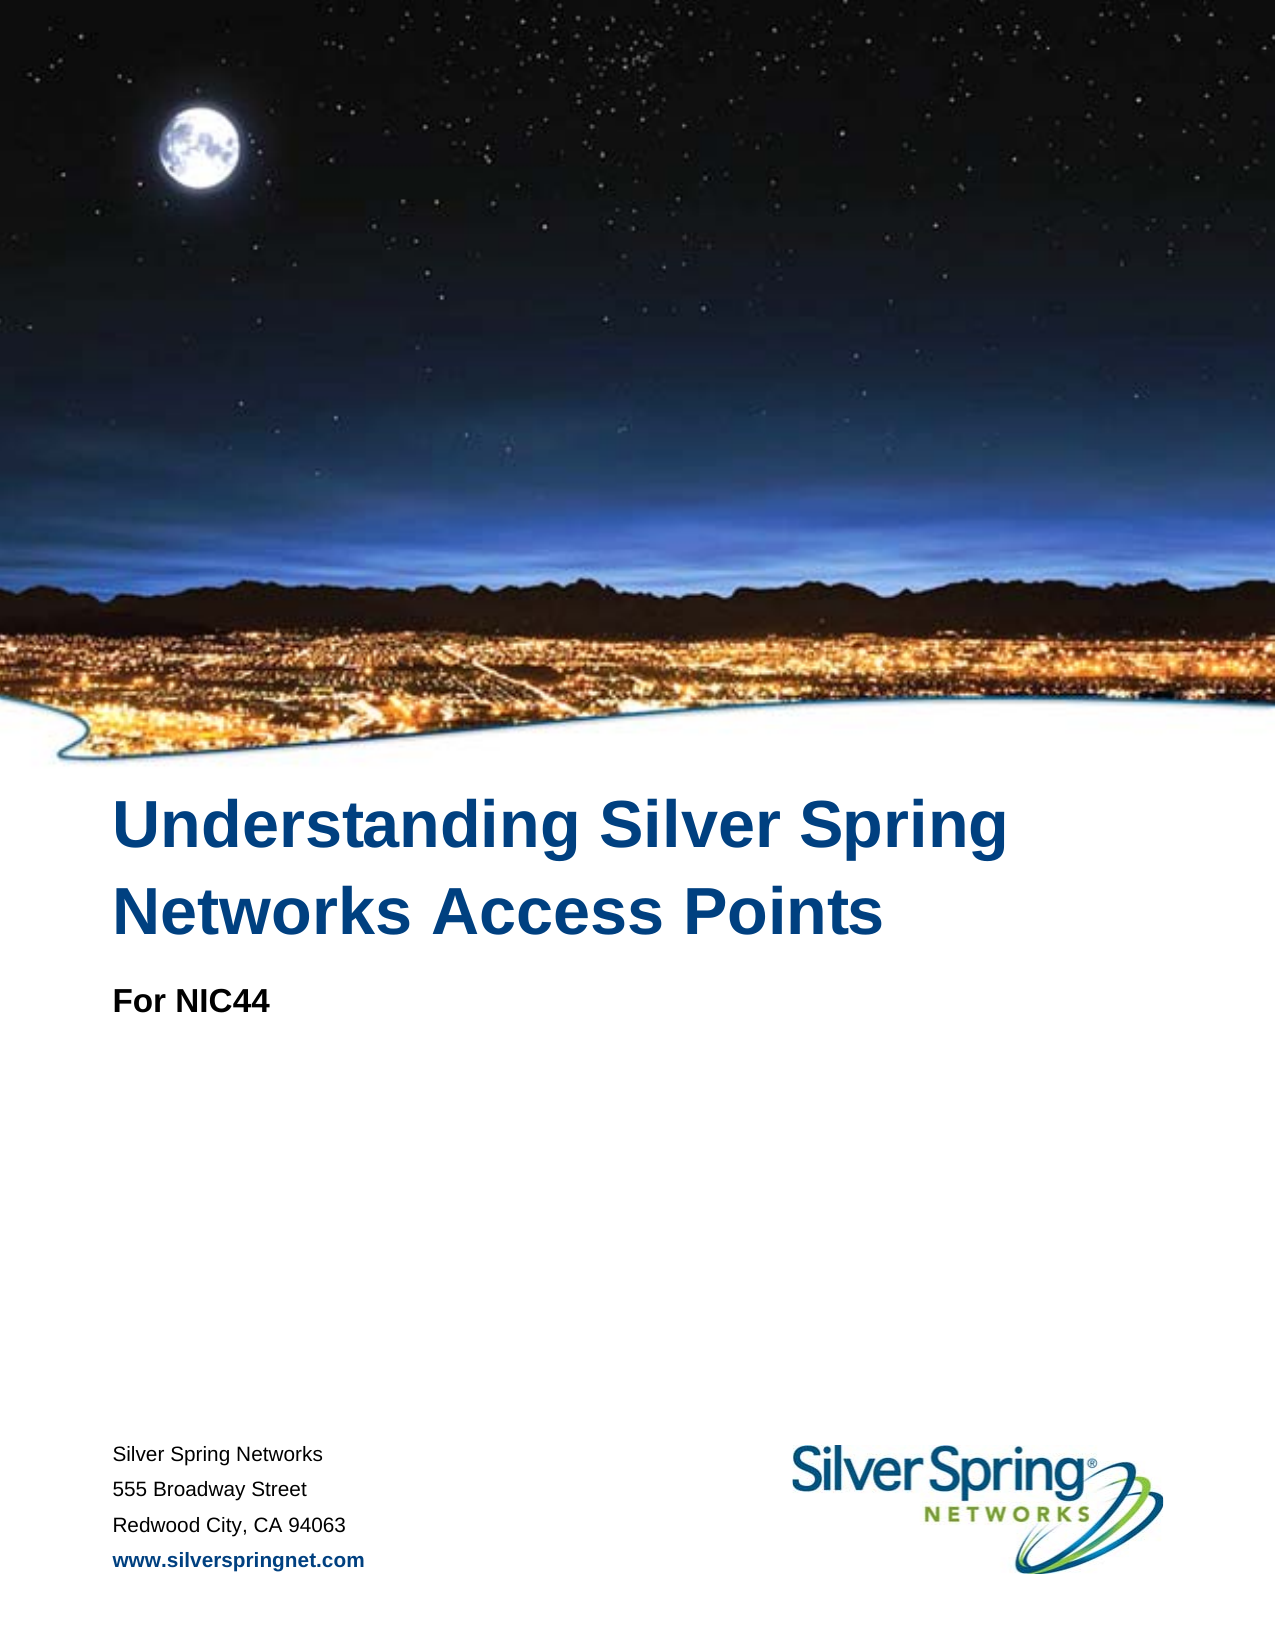 Silver Spring Networks555 Broadway StreetRedwood City, CA 94063www.silverspringnet.comUnderstanding Silver Spring Networks Access PointsFor NIC44